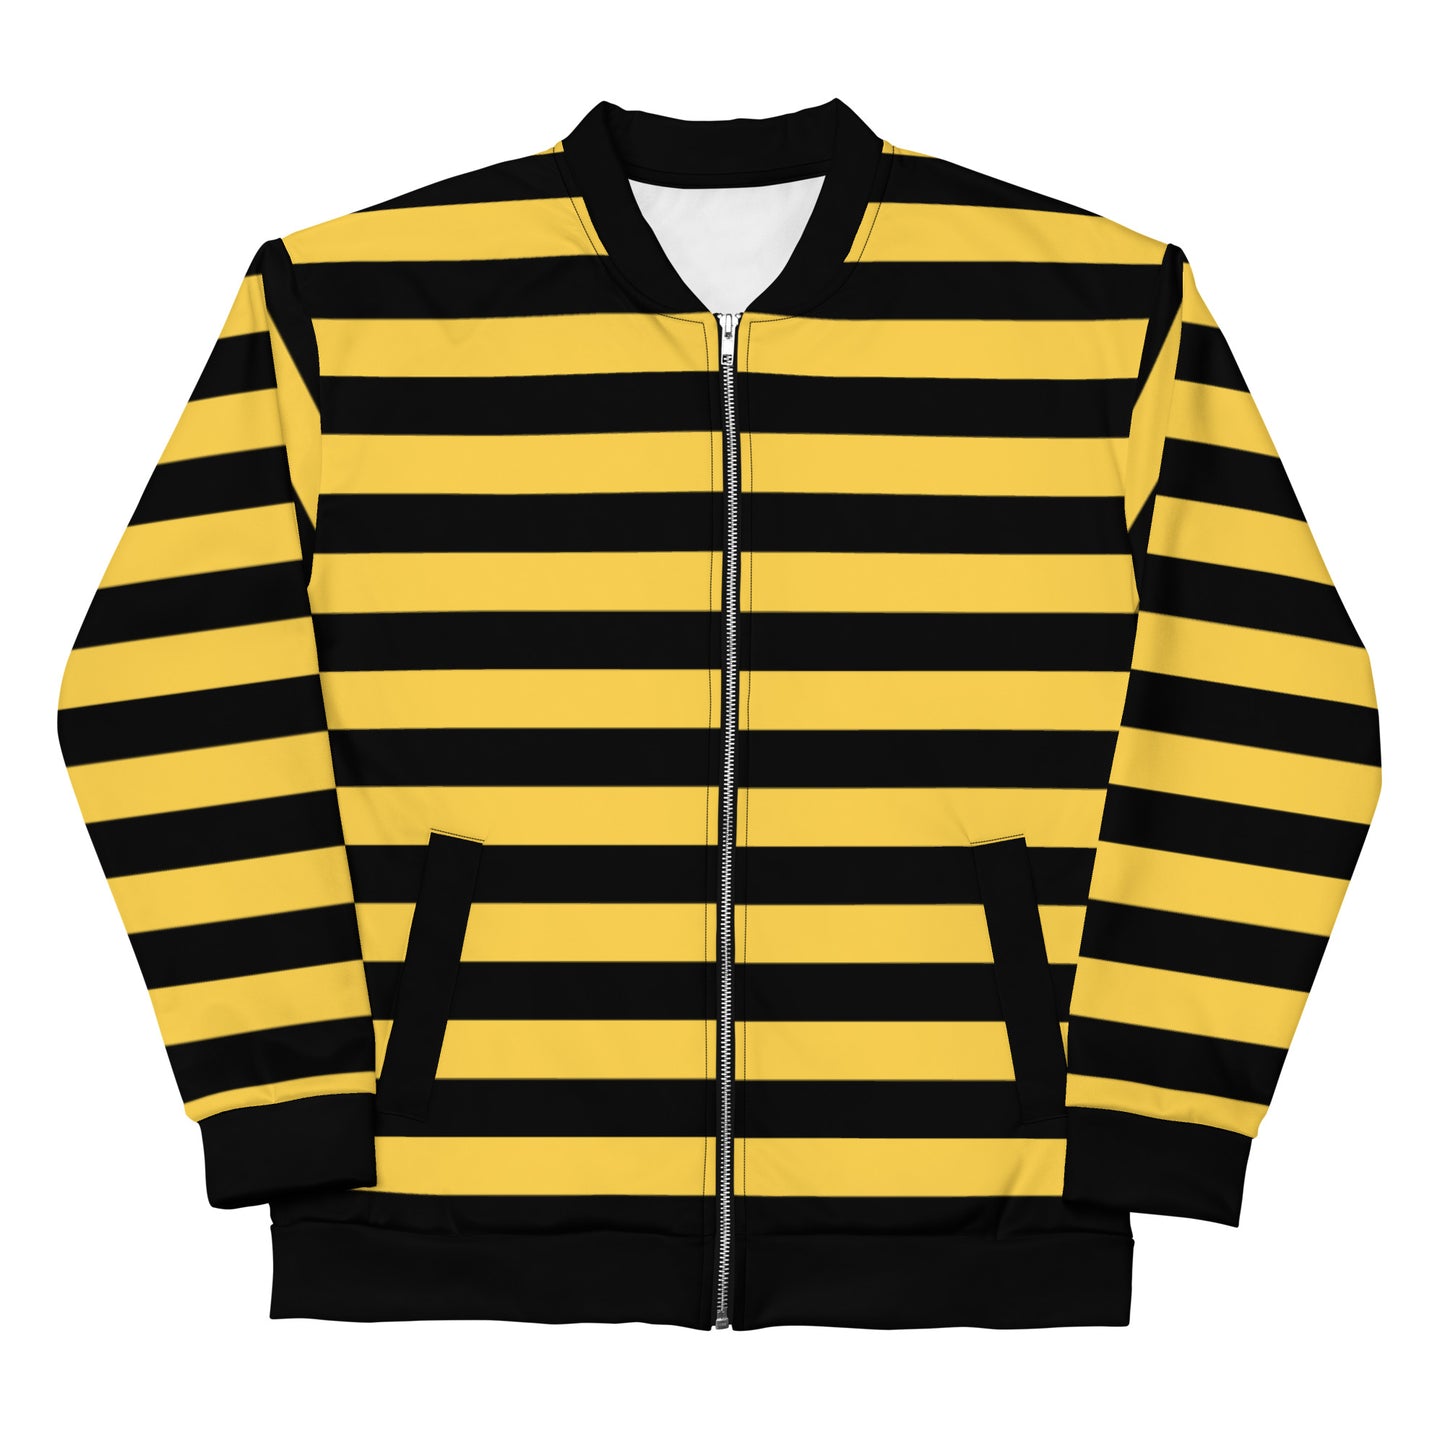 Honey Bee - Inspired By Harry Styles - Sustainably Made Jacket